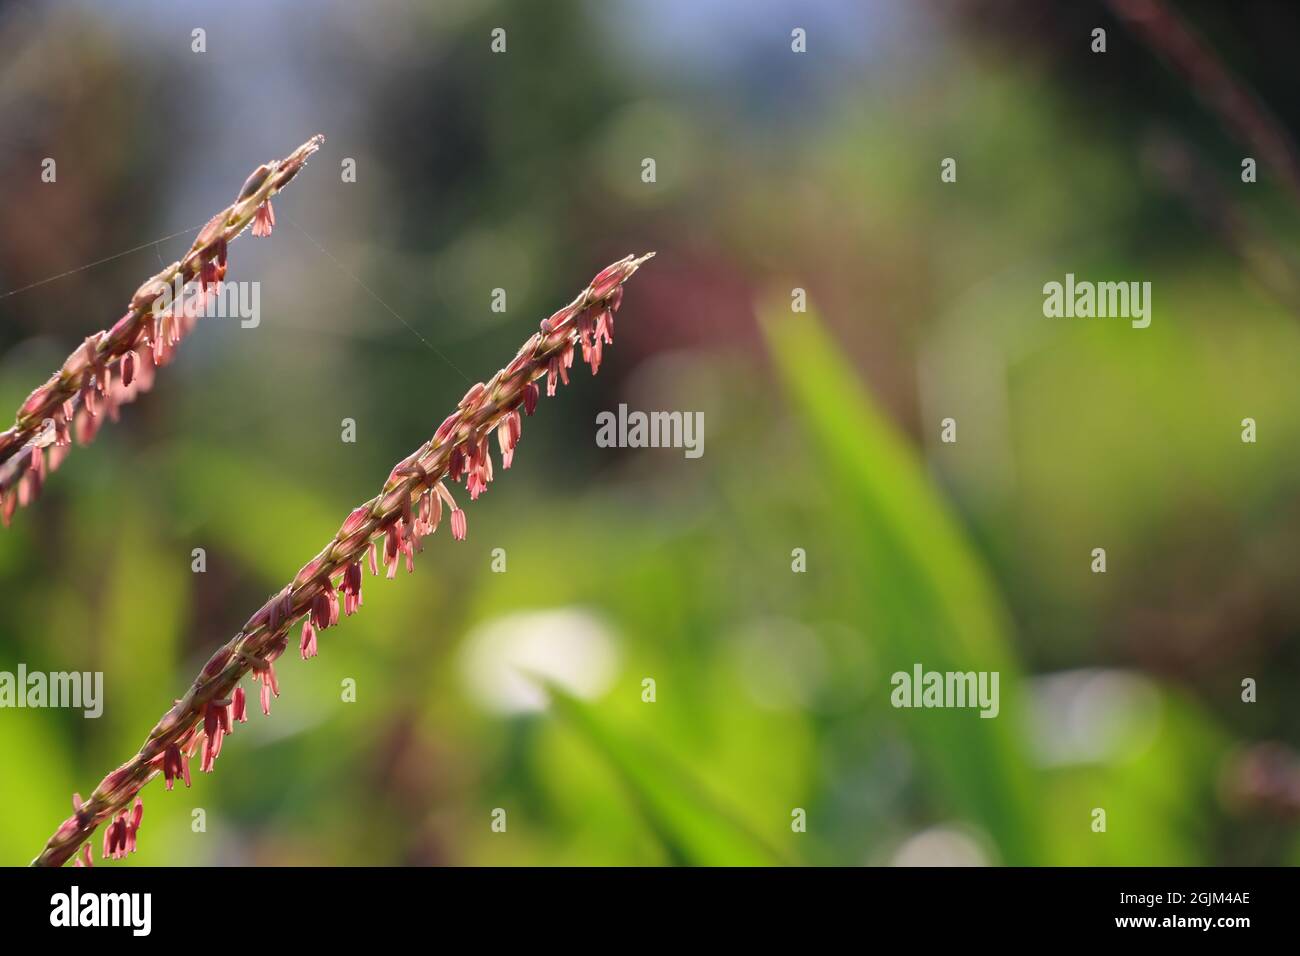 Closeup shot of growing Silvergrass twigs Stock Photo